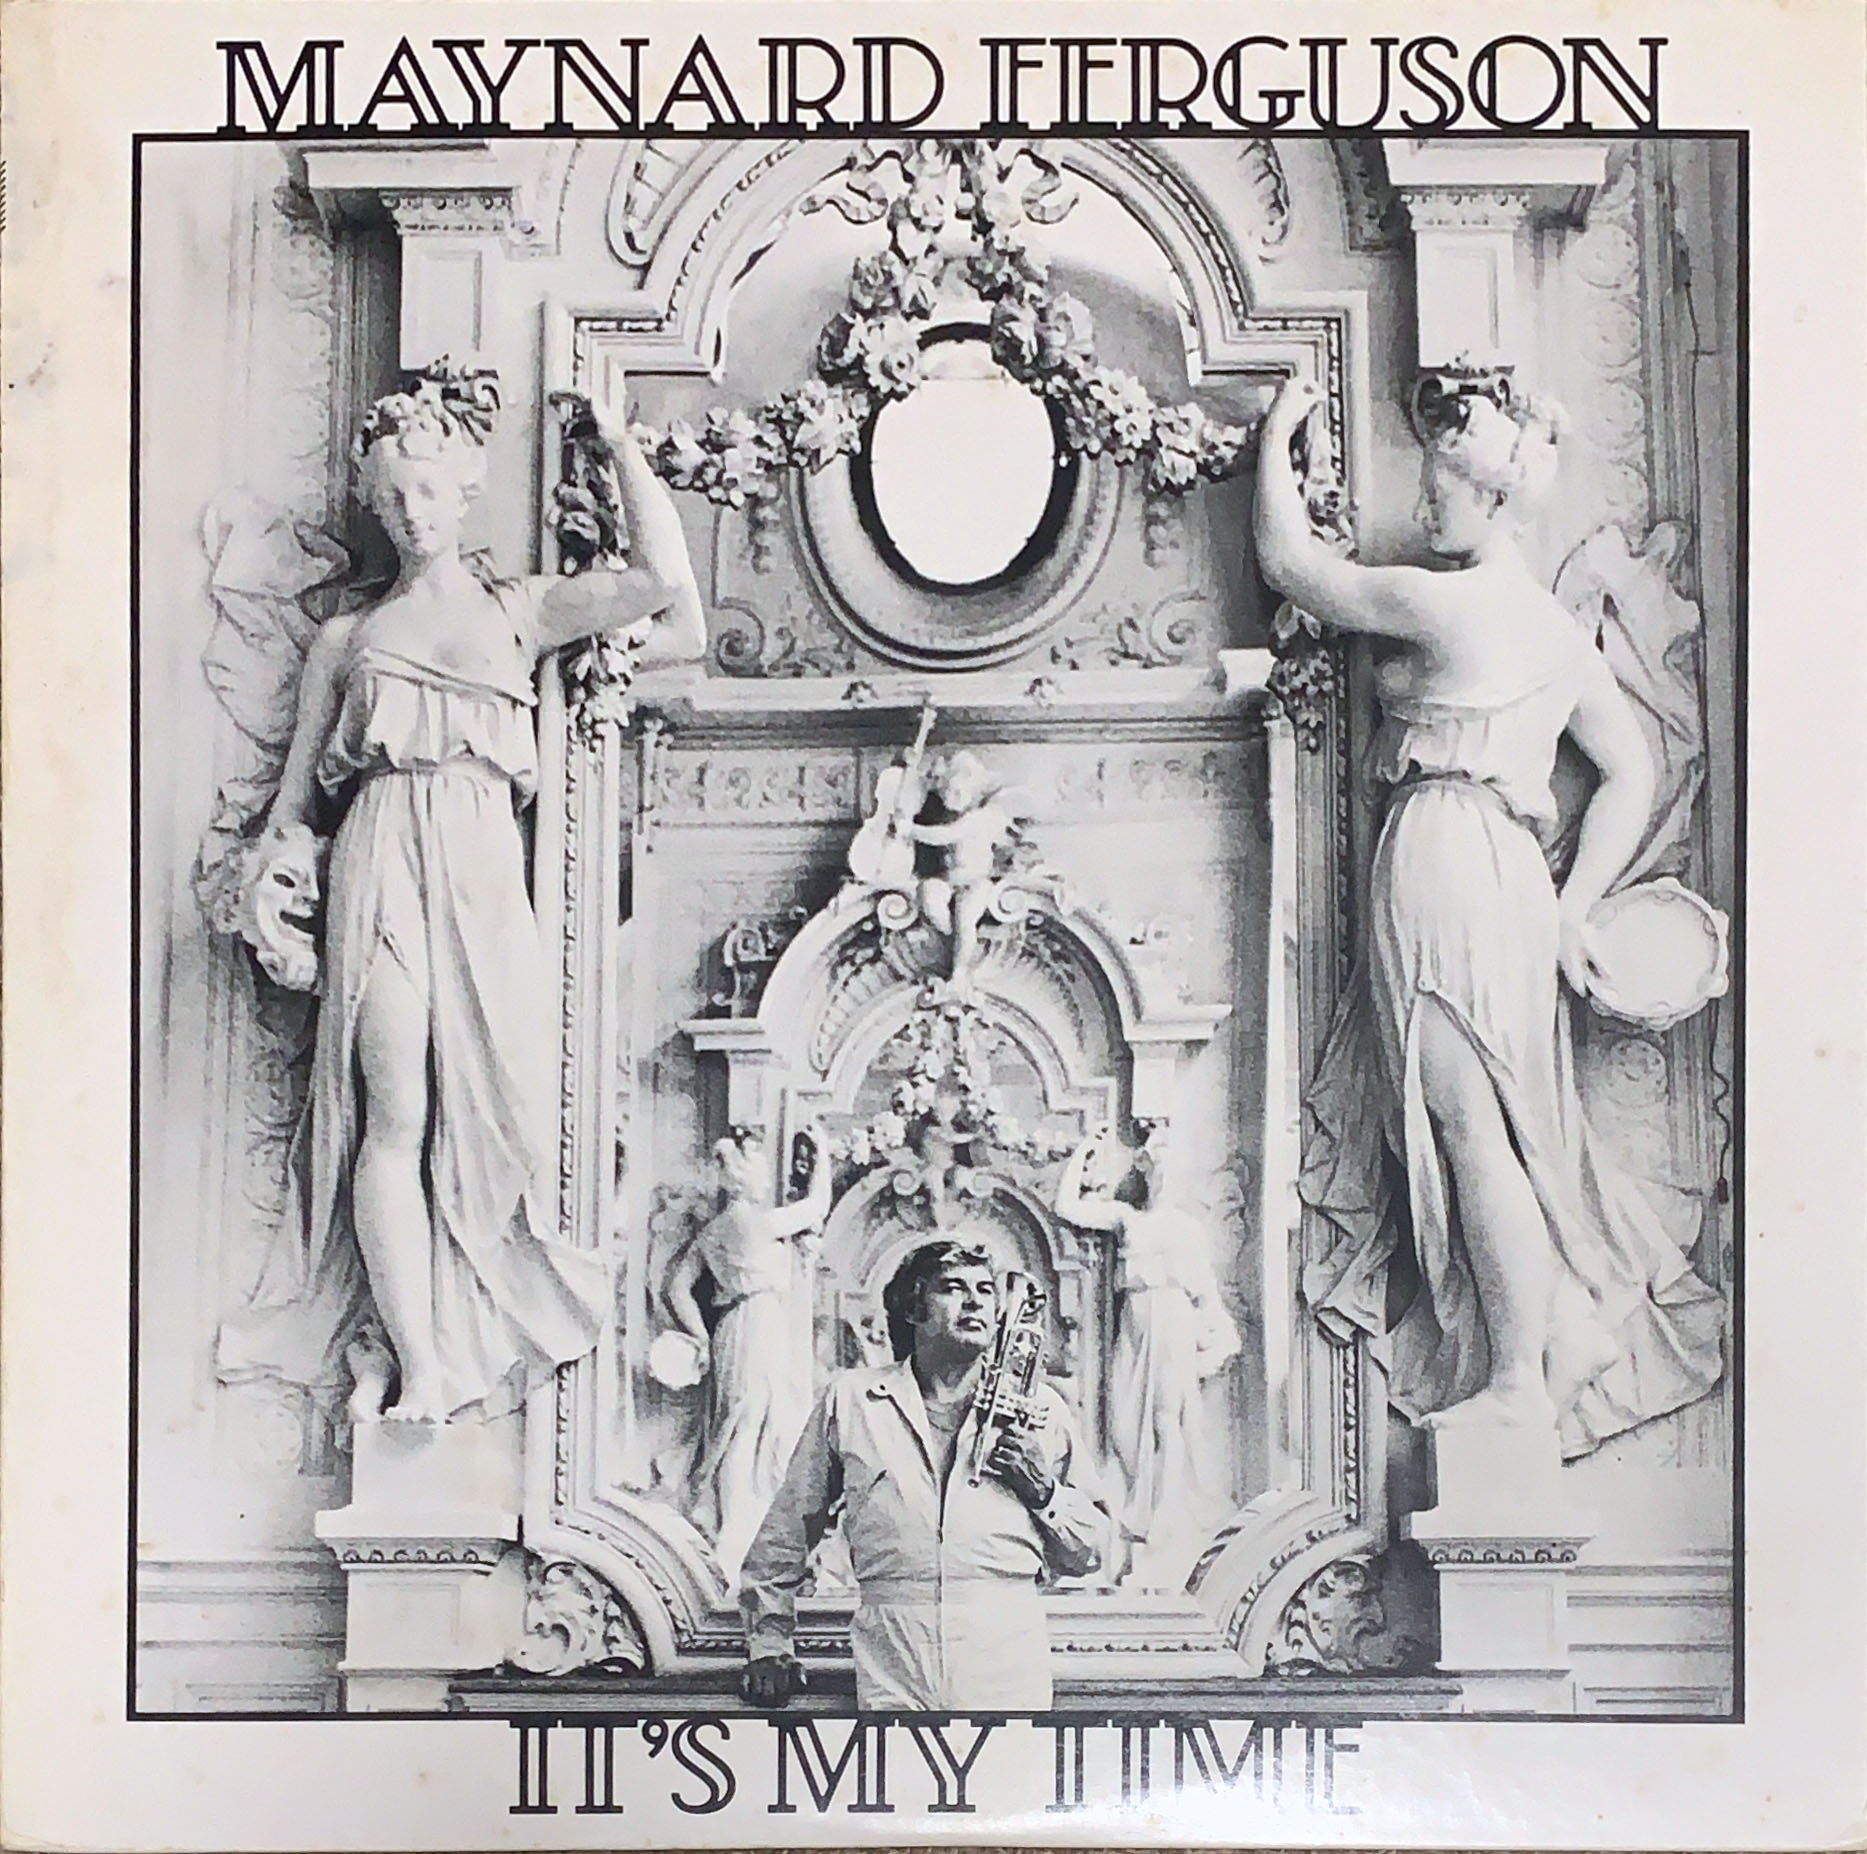 It's My Time [LP] - Maynard Ferguson - bar chiba Music Store